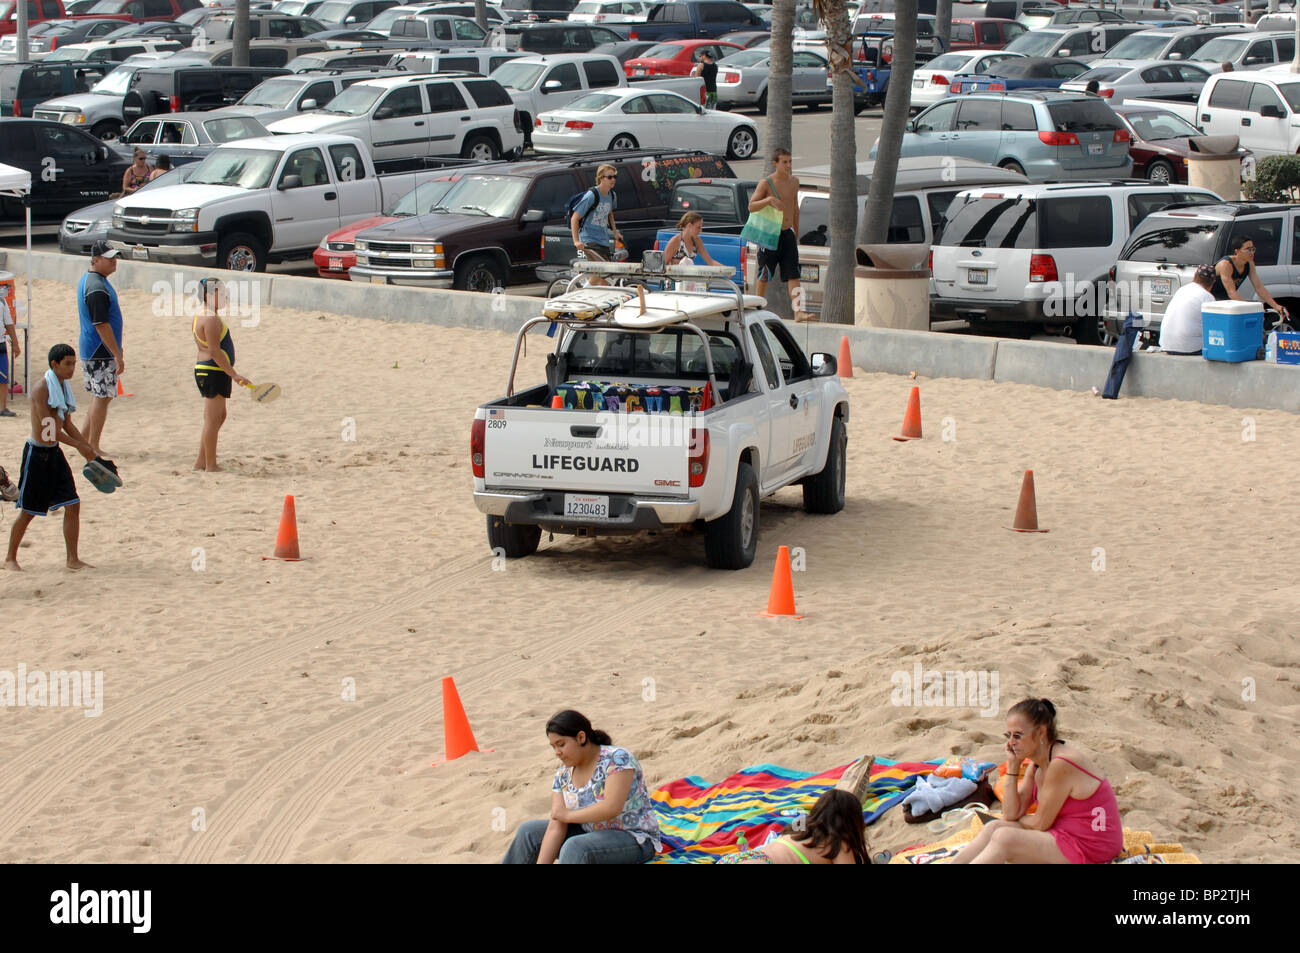 Lifeguard response vehicle driving near the shoreline at Newport Beach, California Stock Photo